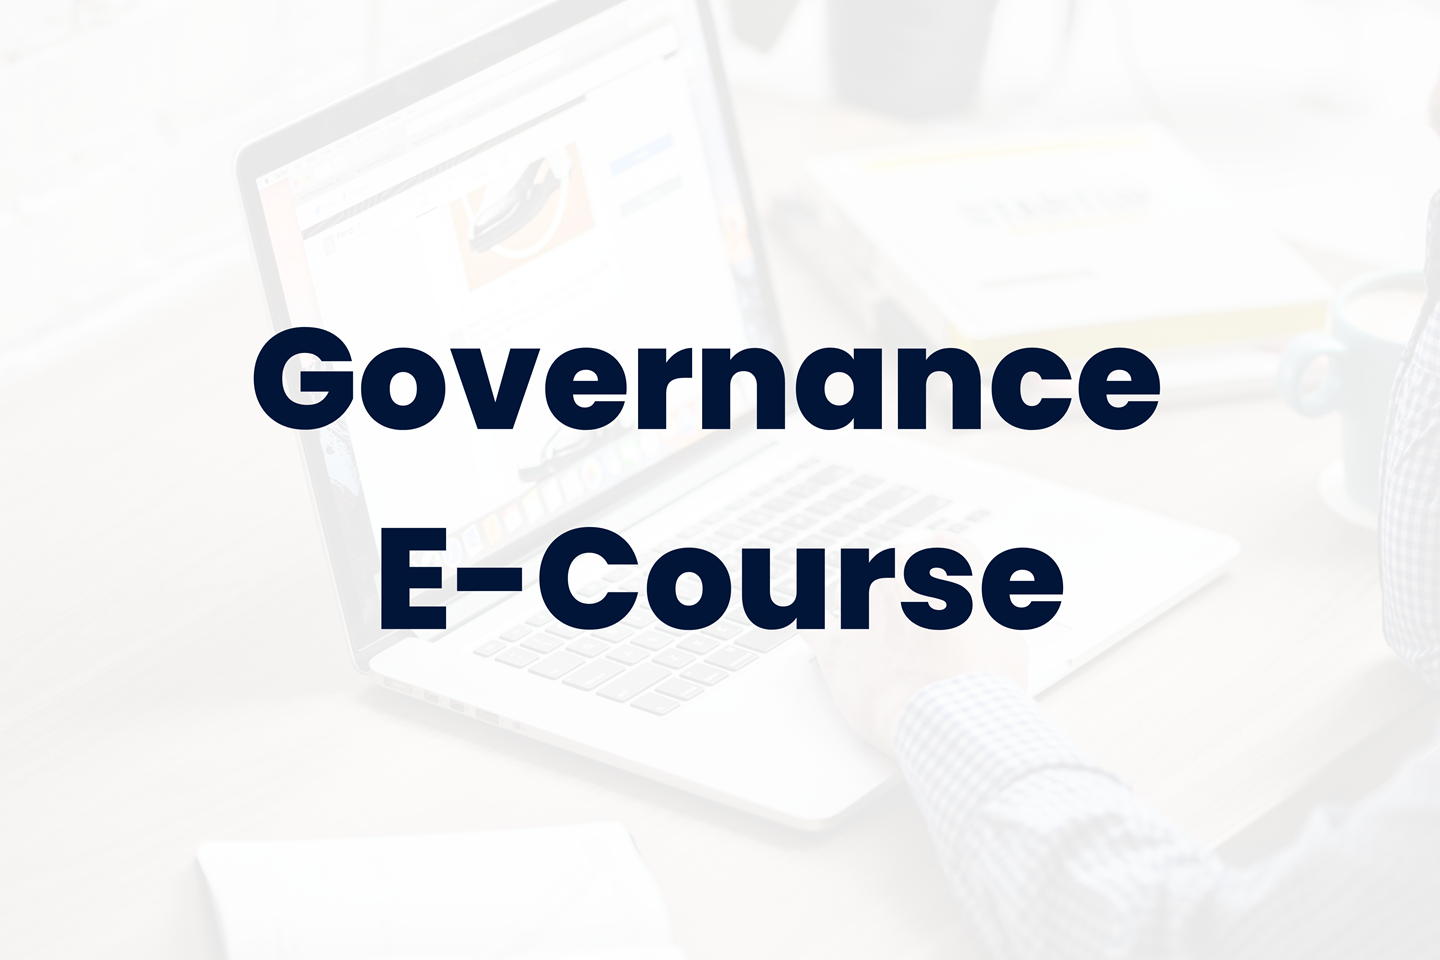 Governance e-course text